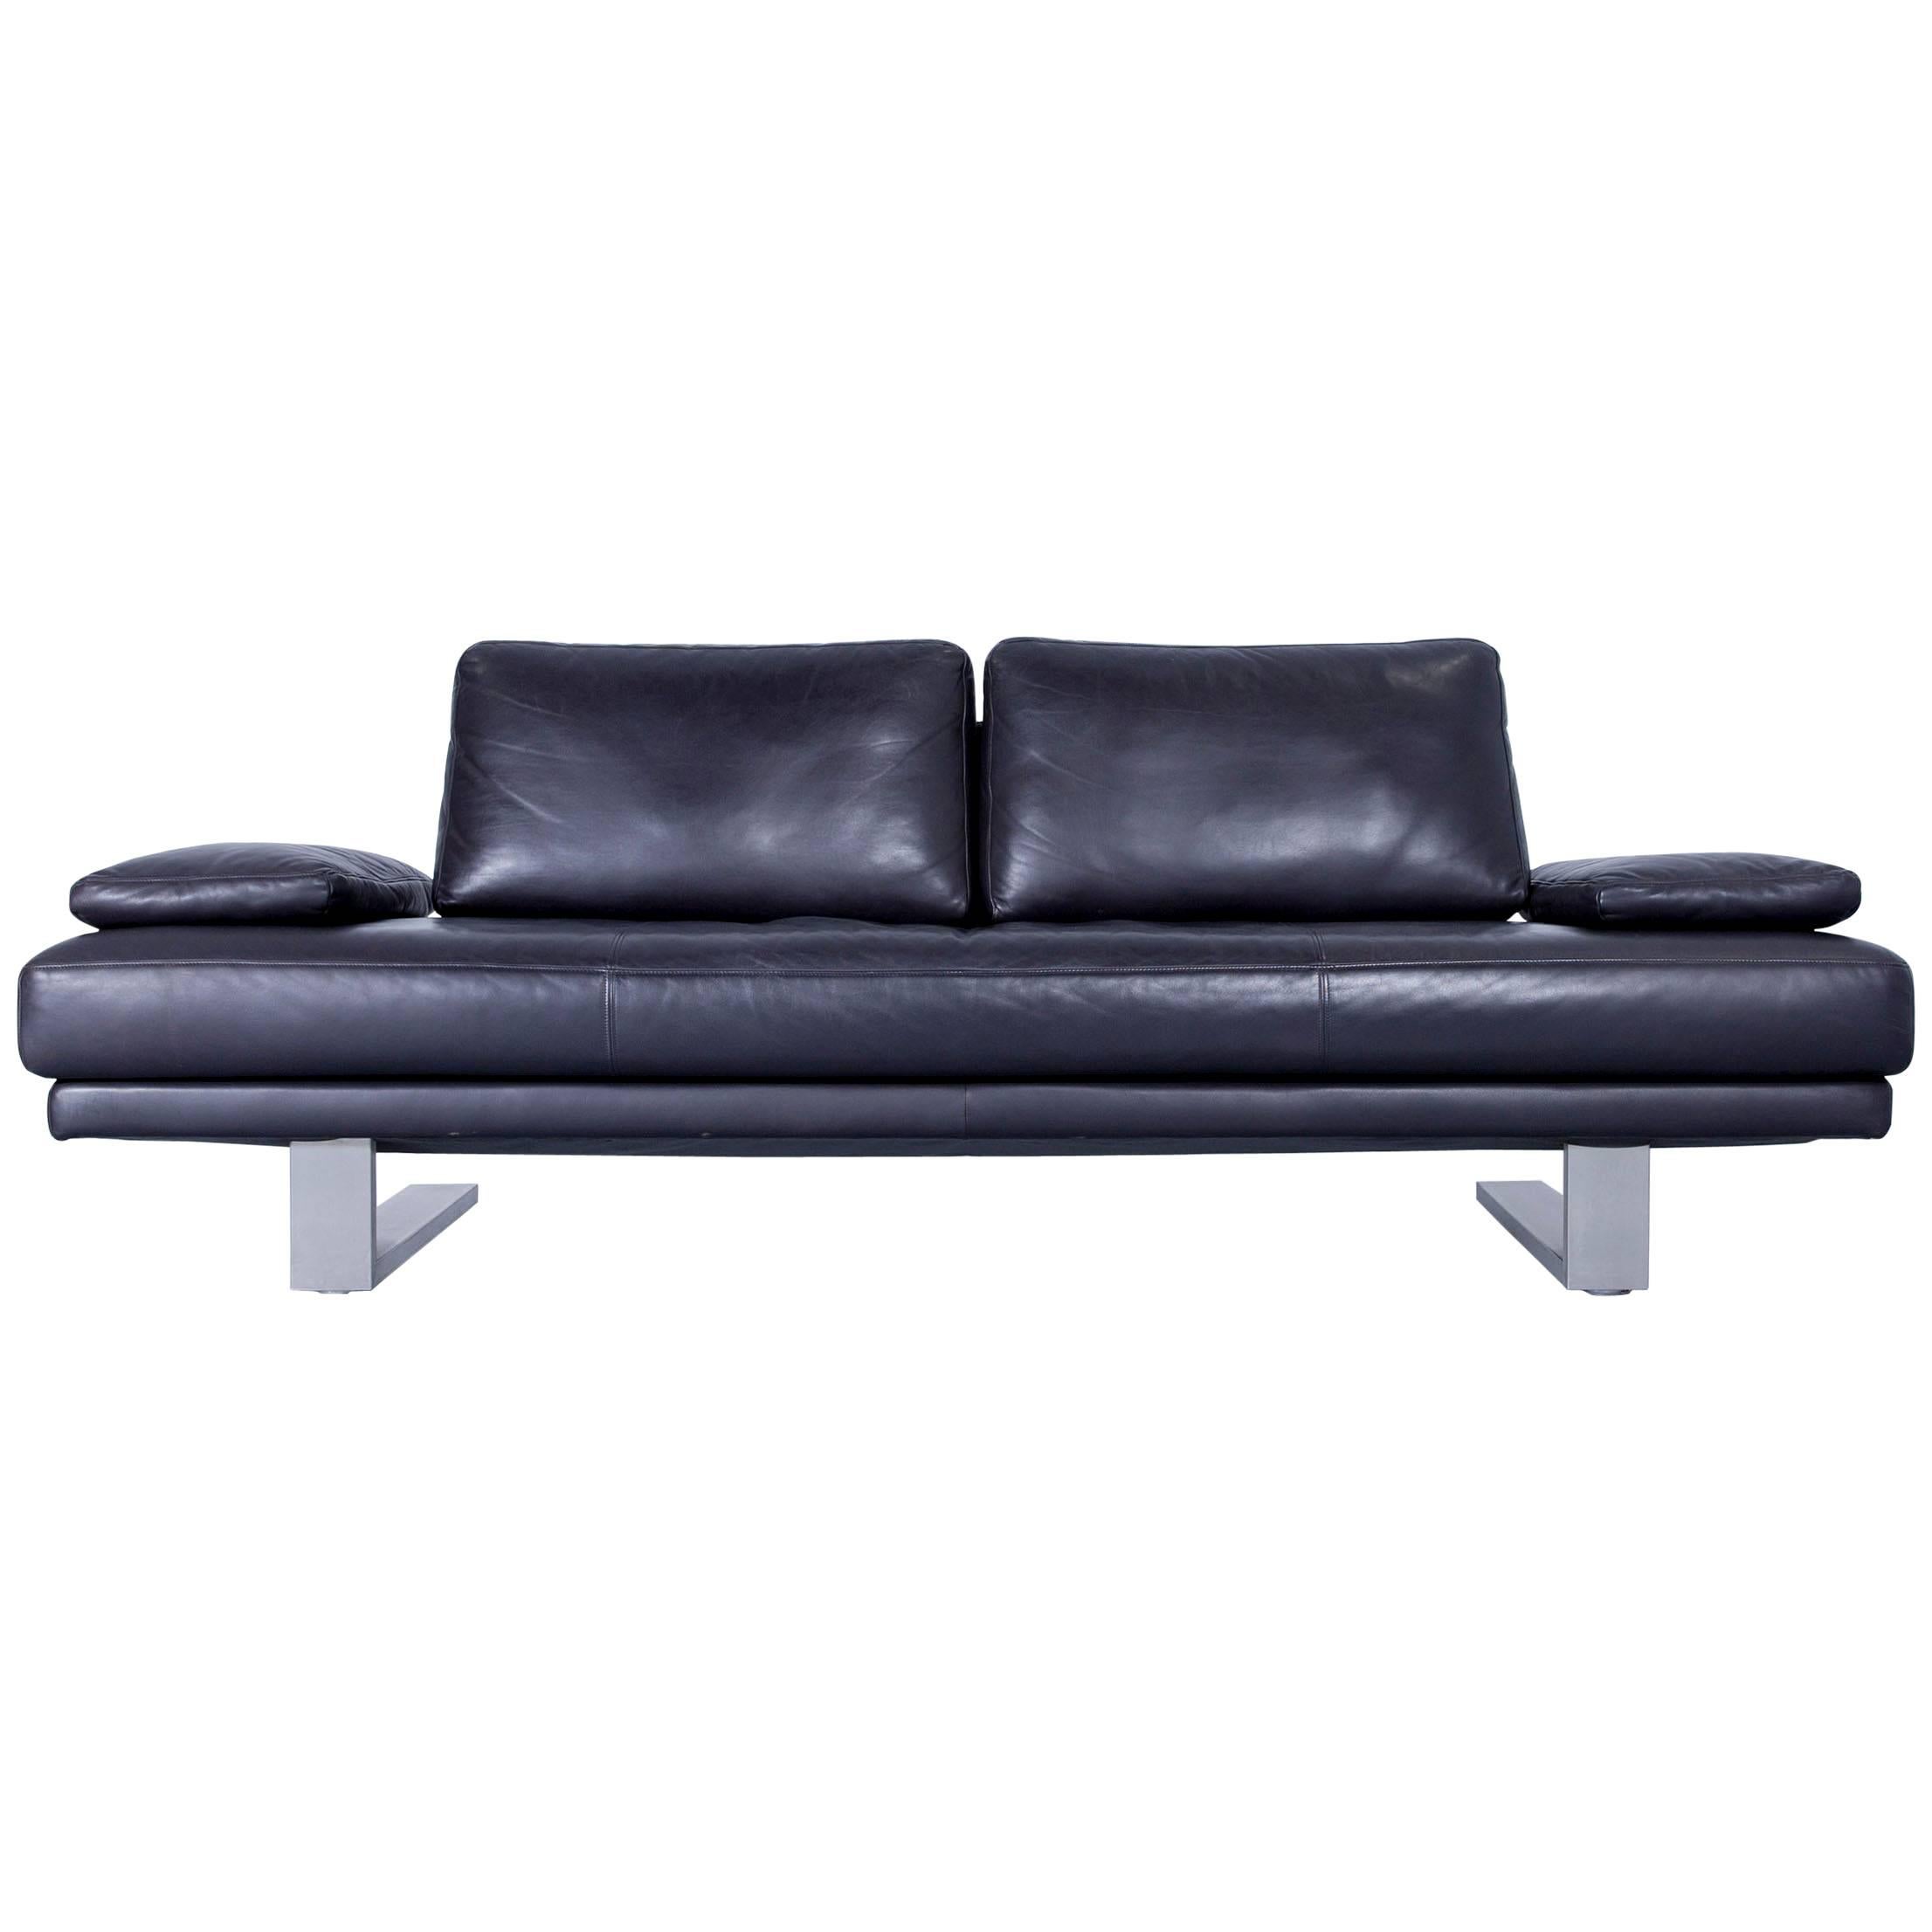 Rolf Benz 6600 Sofa Designer Leather Aubergine Black Three-Seat Couch Modern